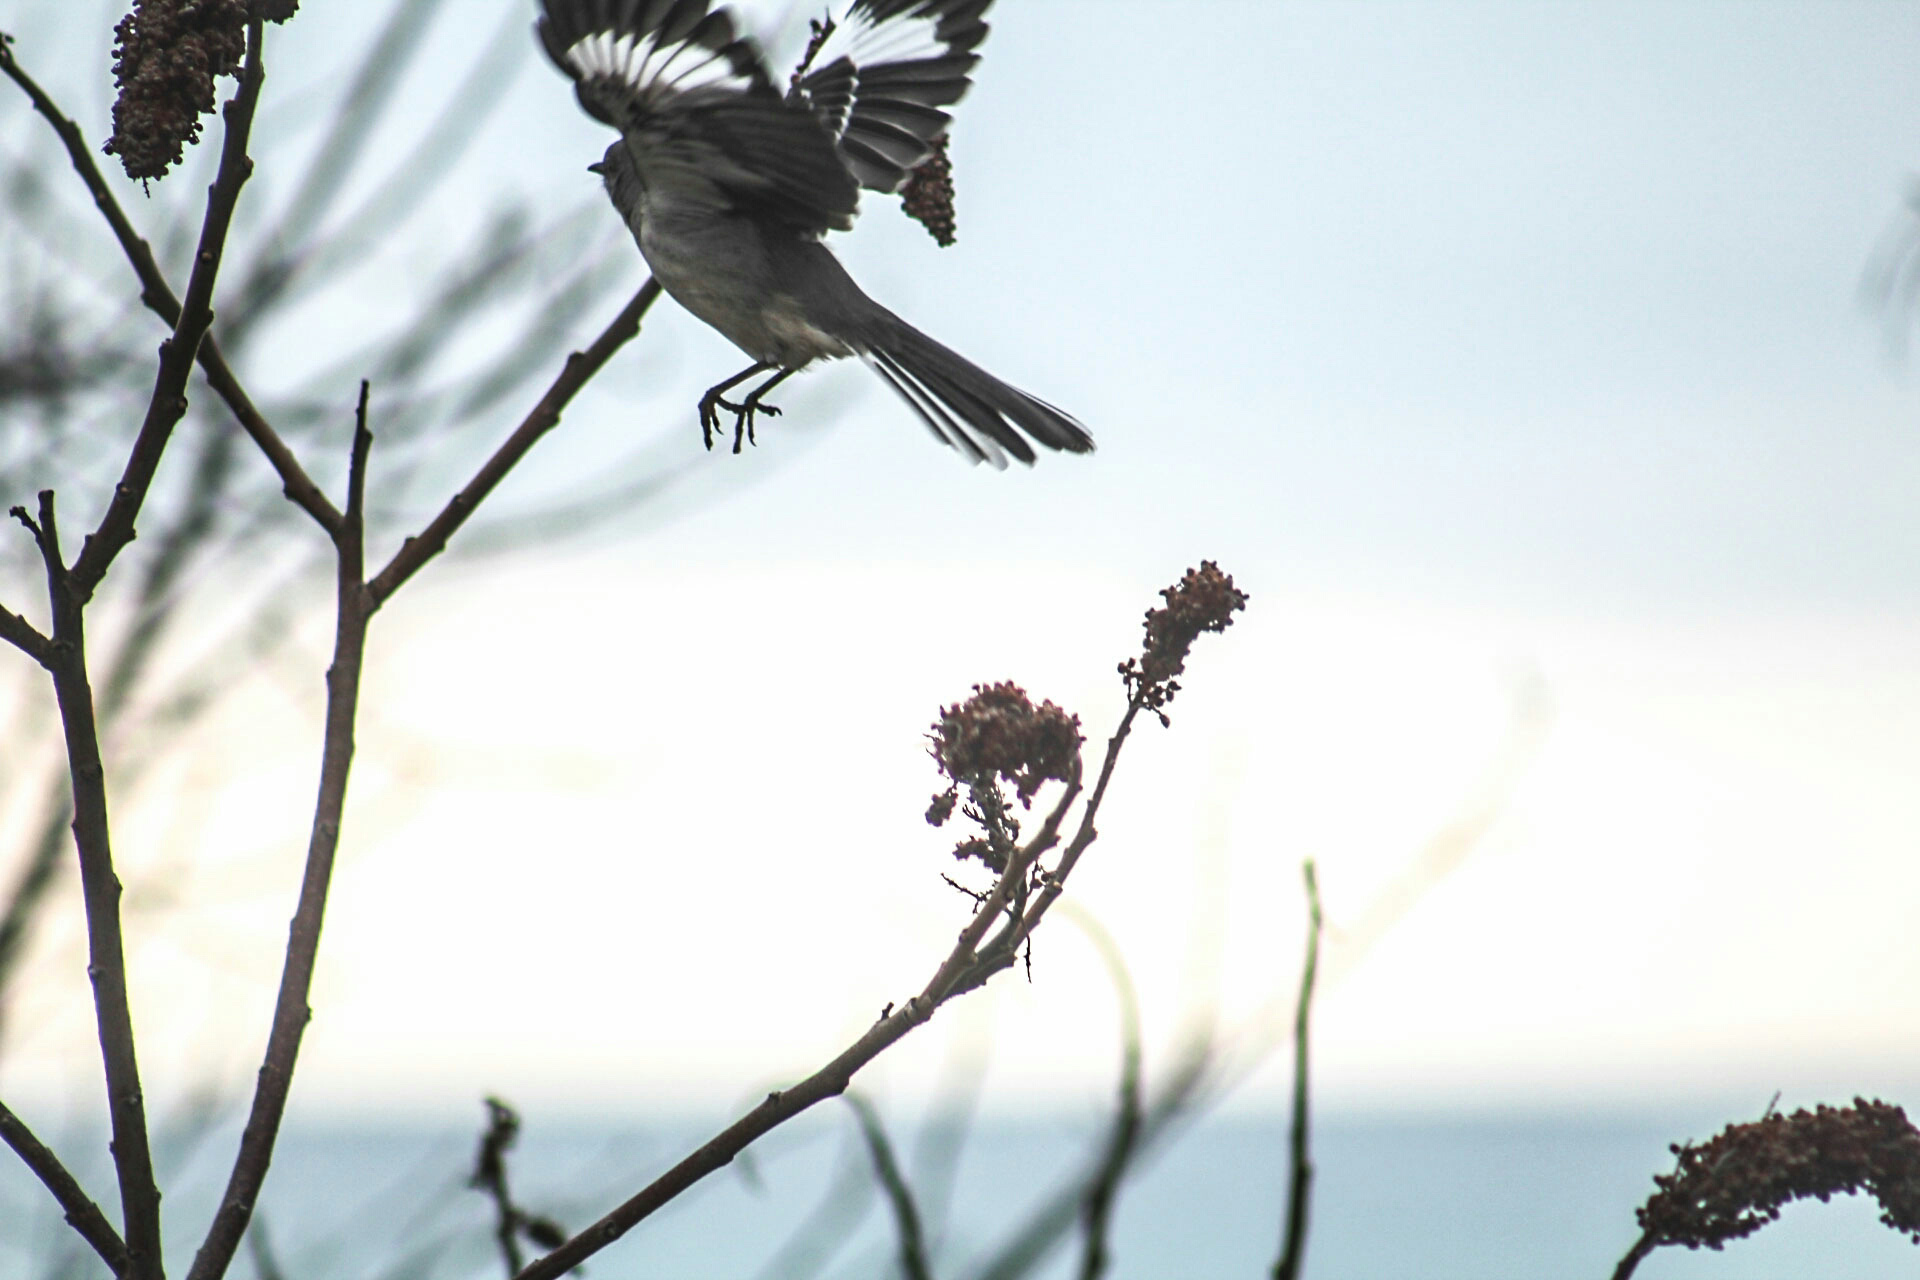 Northern mockingbird in flight